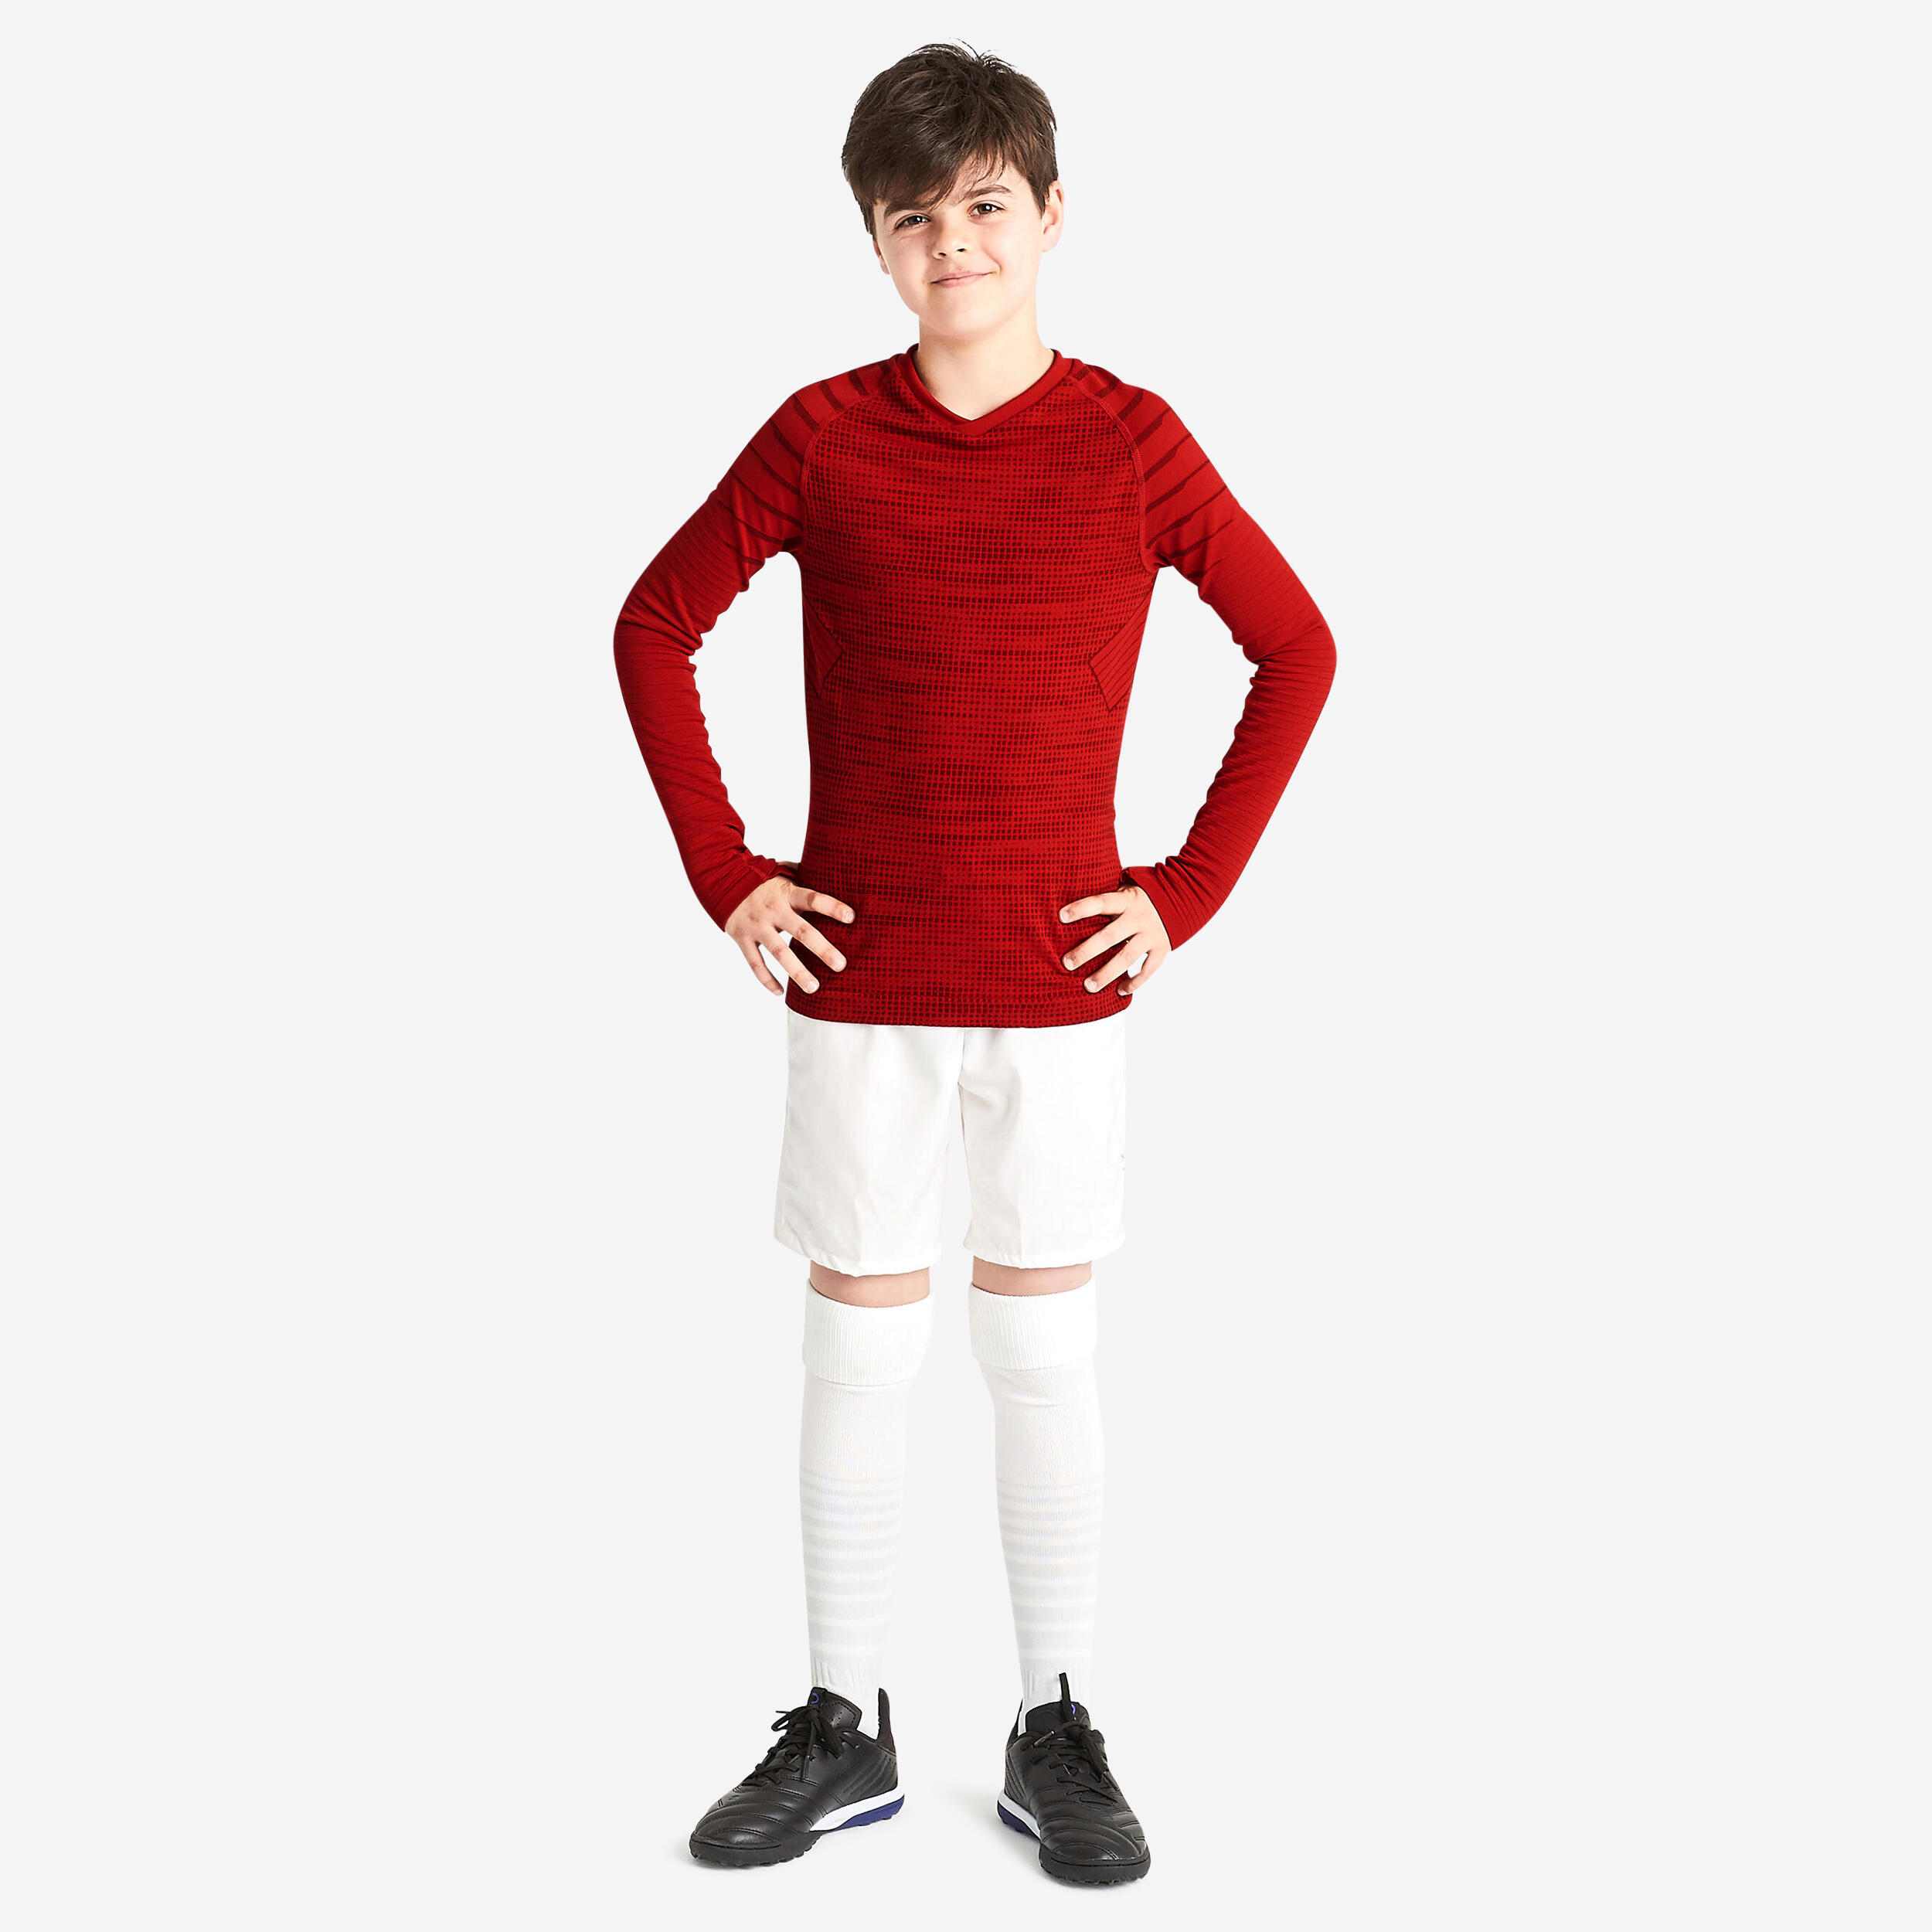 KIPSTA Kids' thermal long-sleeved football top, red